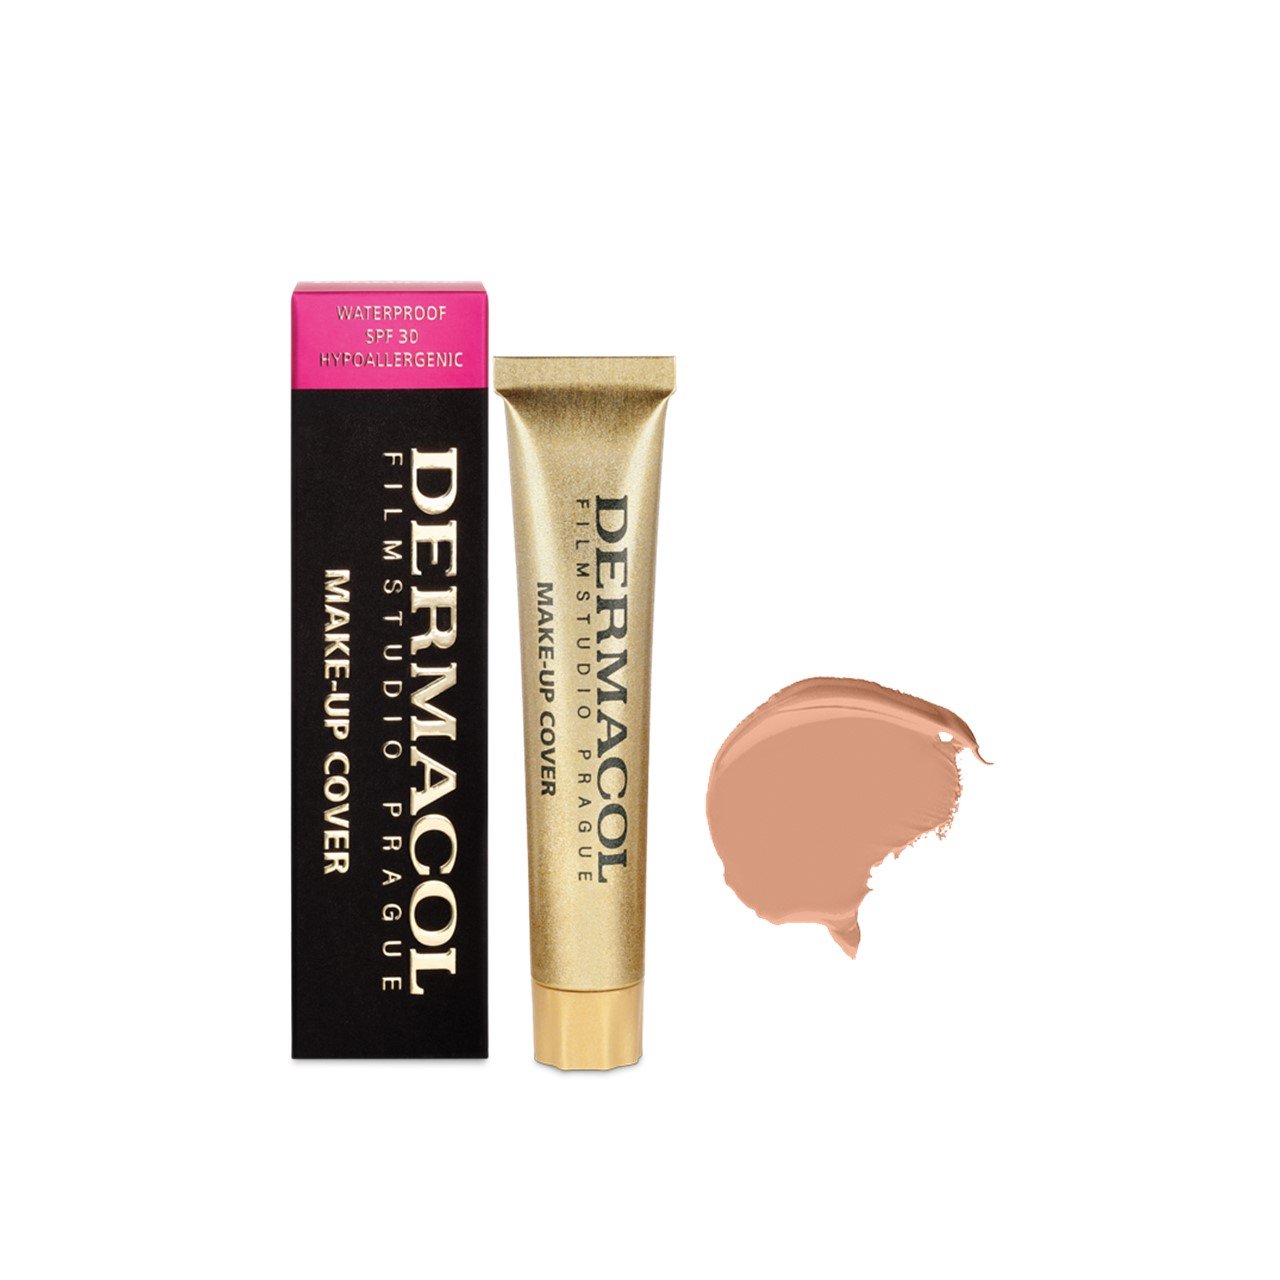 Dermacol Make-Up Cover Foundation SPF30 213 30g